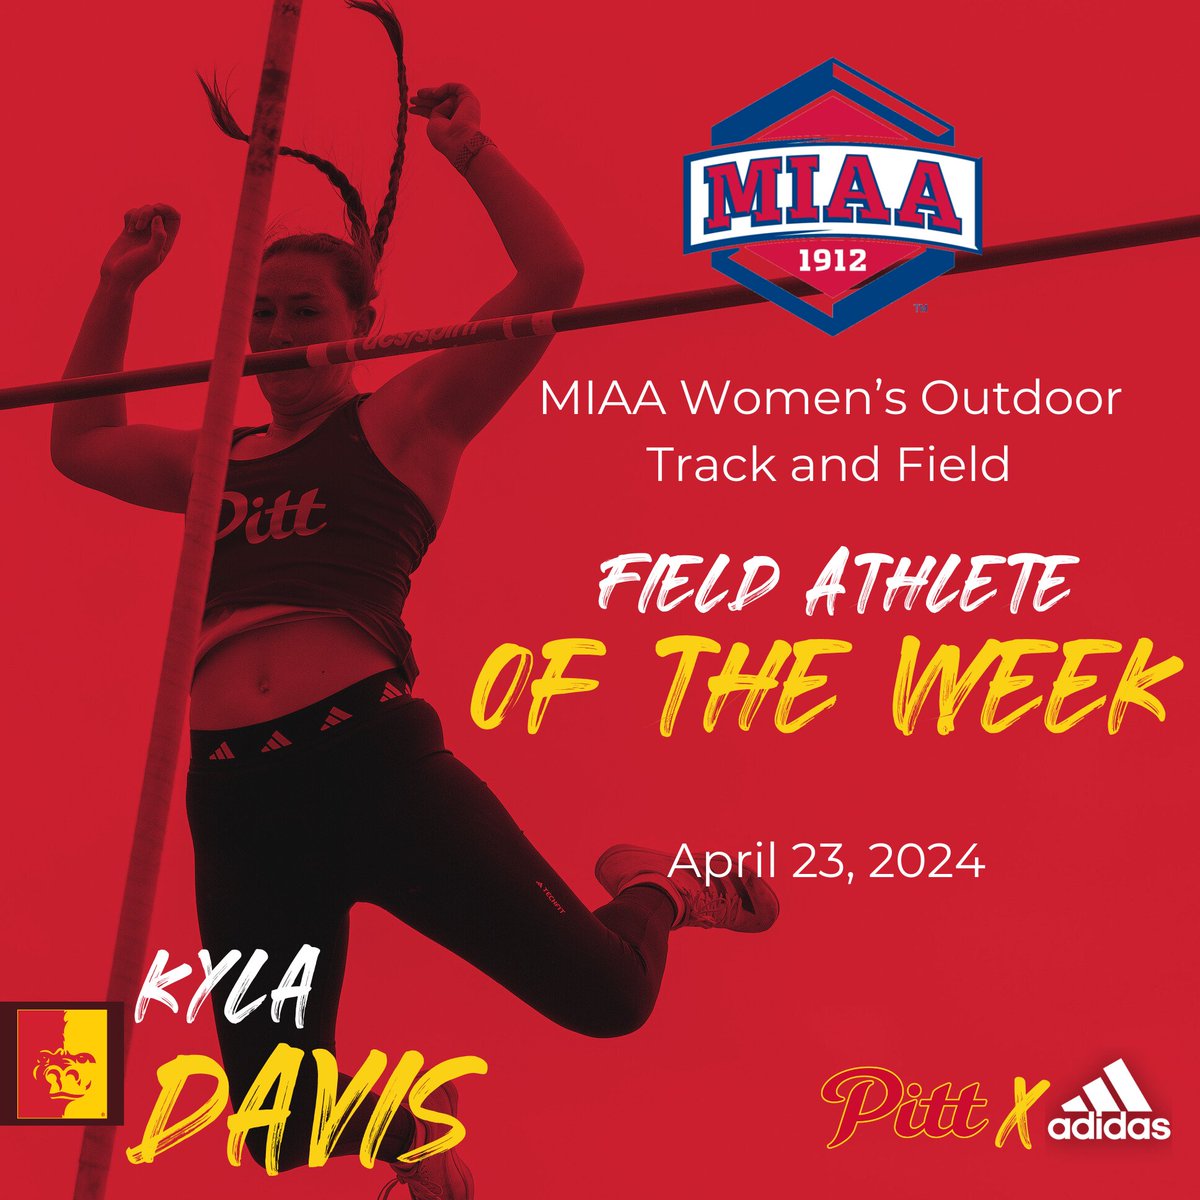 Another one for Kyla Davis‼️ Davis is the MIAA Women's Outdoor Field Athlete of the Week after breaking the school pole vault record over the weekend 🦍💪 @GorillasTrack|@pittstate|@KylaDavisPV